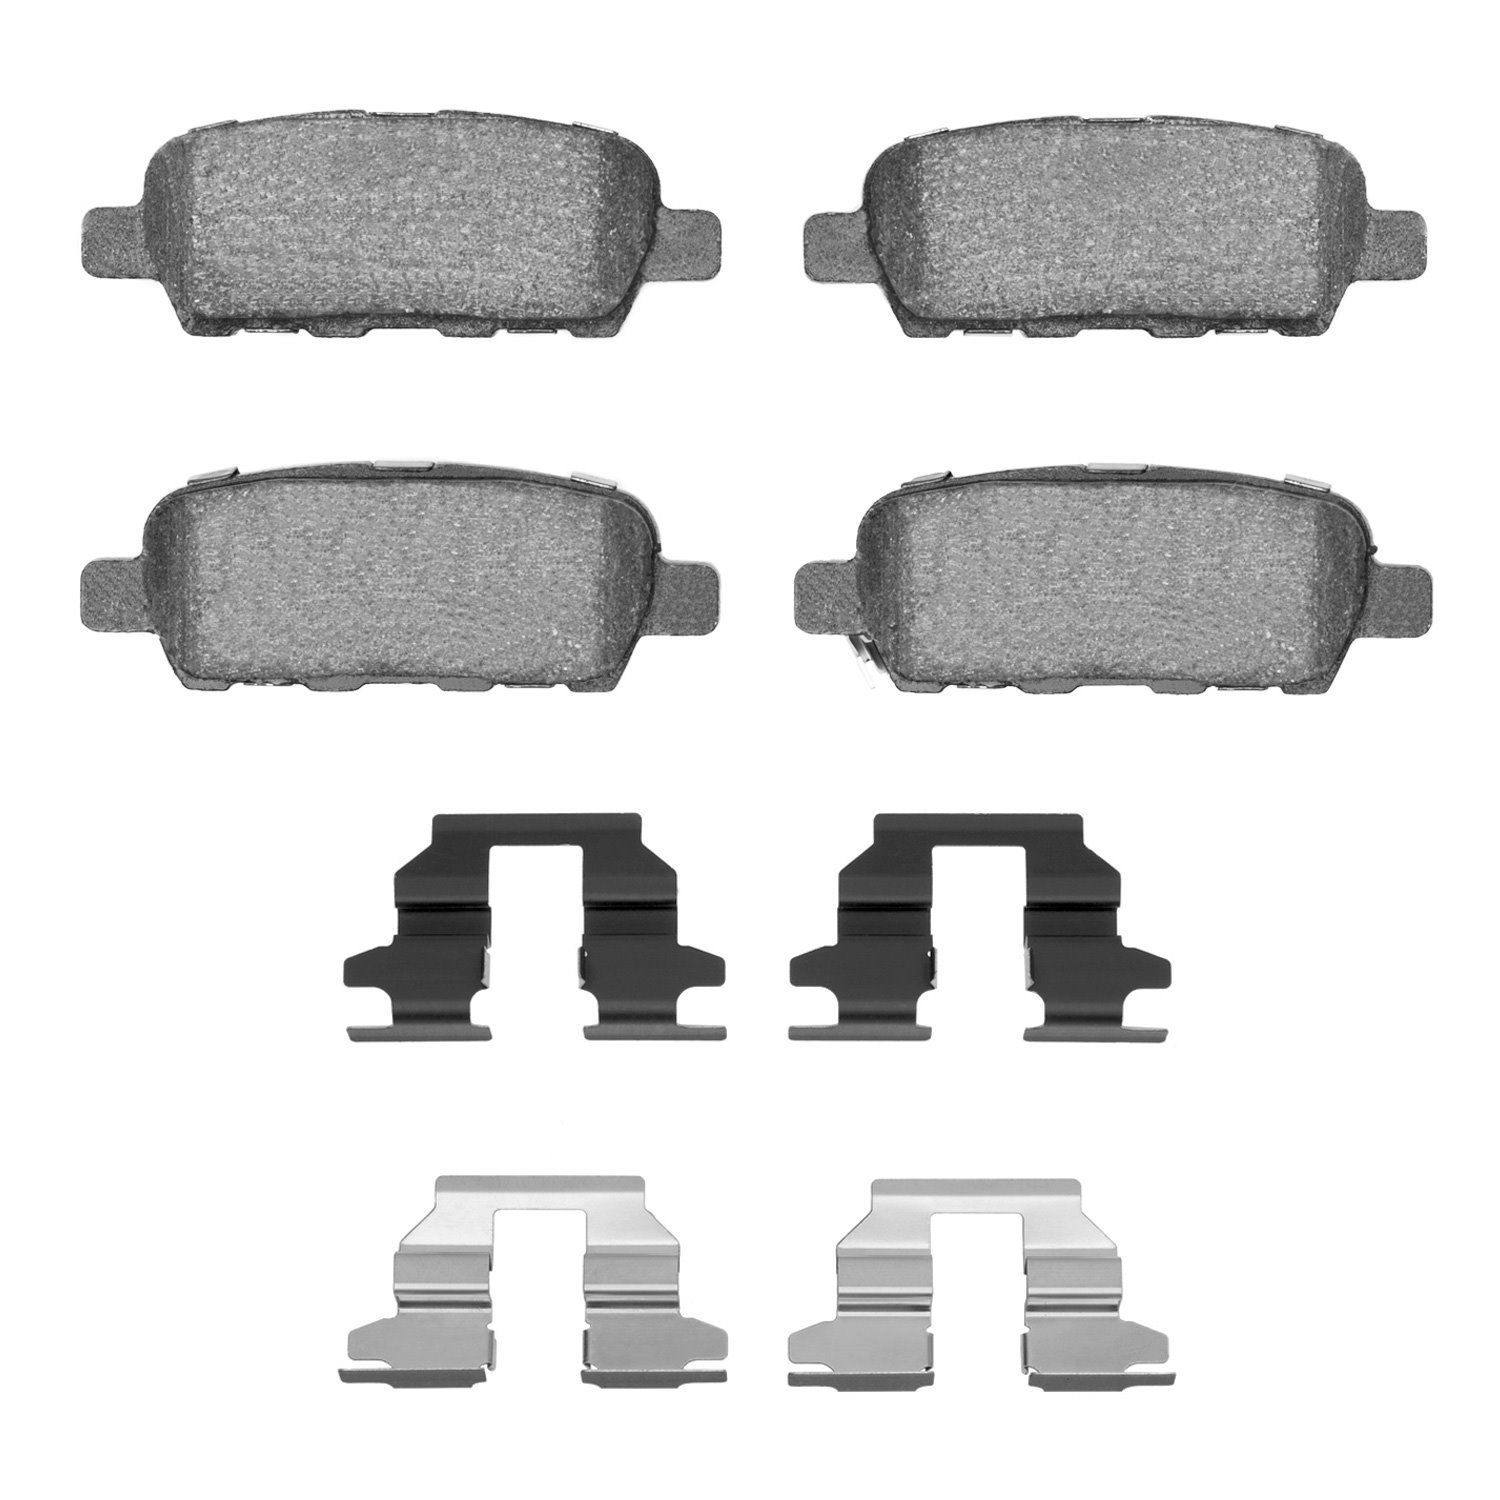 1115-0905-01 Active Performance Brake Pads & Hardware Kit, Fits Select Multiple Makes/Models, Position: Rear